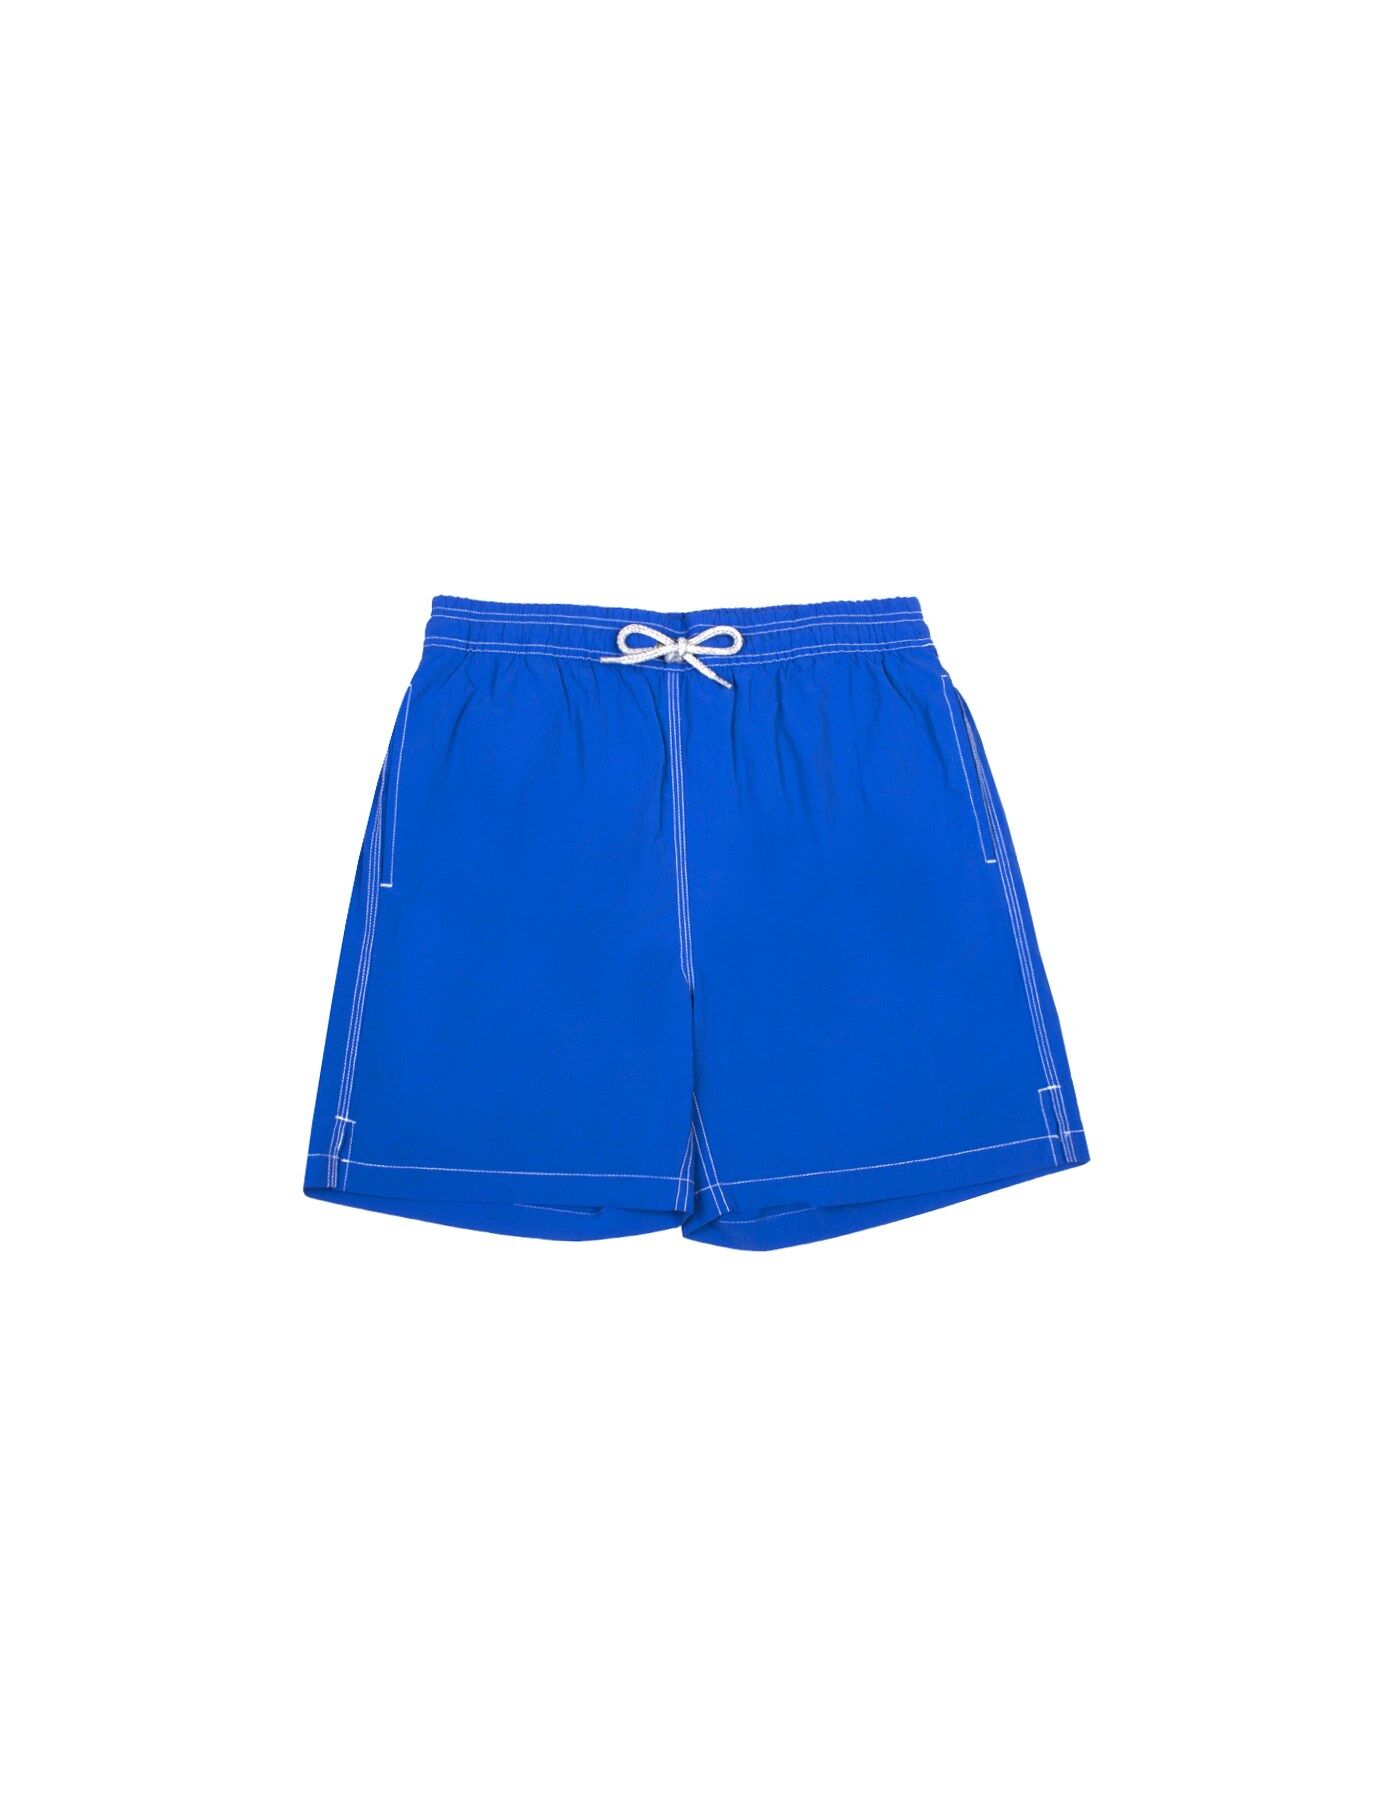 Hawes & Curtis Men's Garment Dye Swim Shorts in Blue   Small